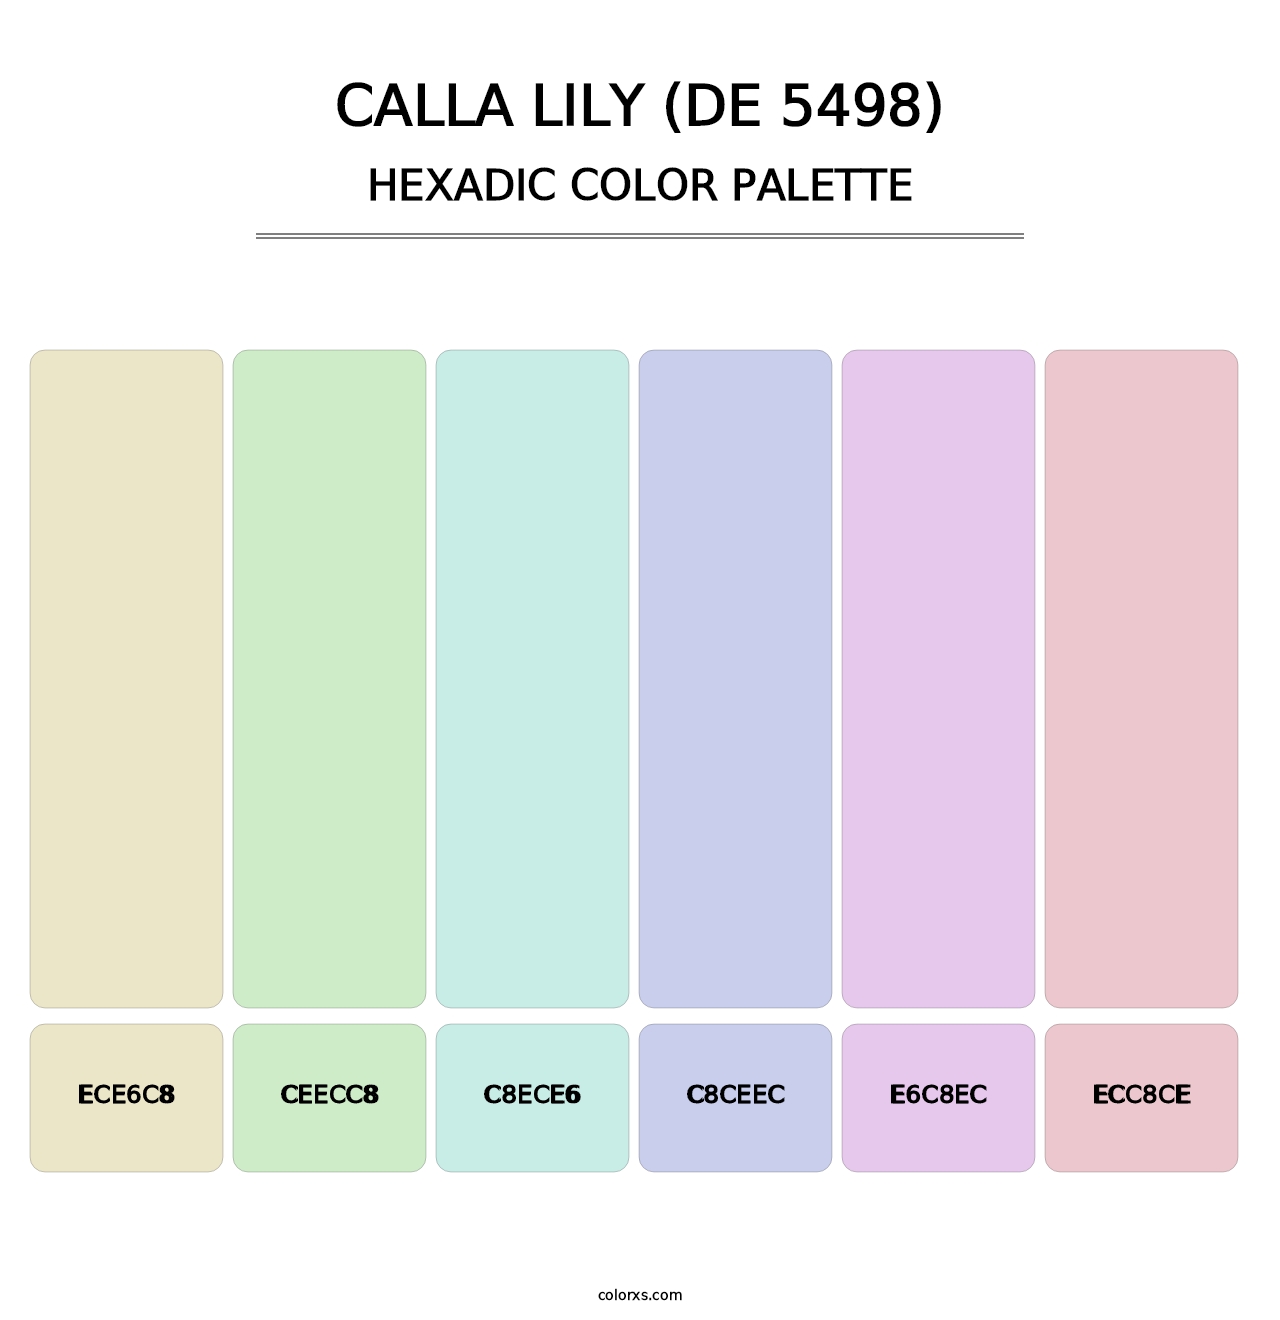 Calla Lily (DE 5498) - Hexadic Color Palette